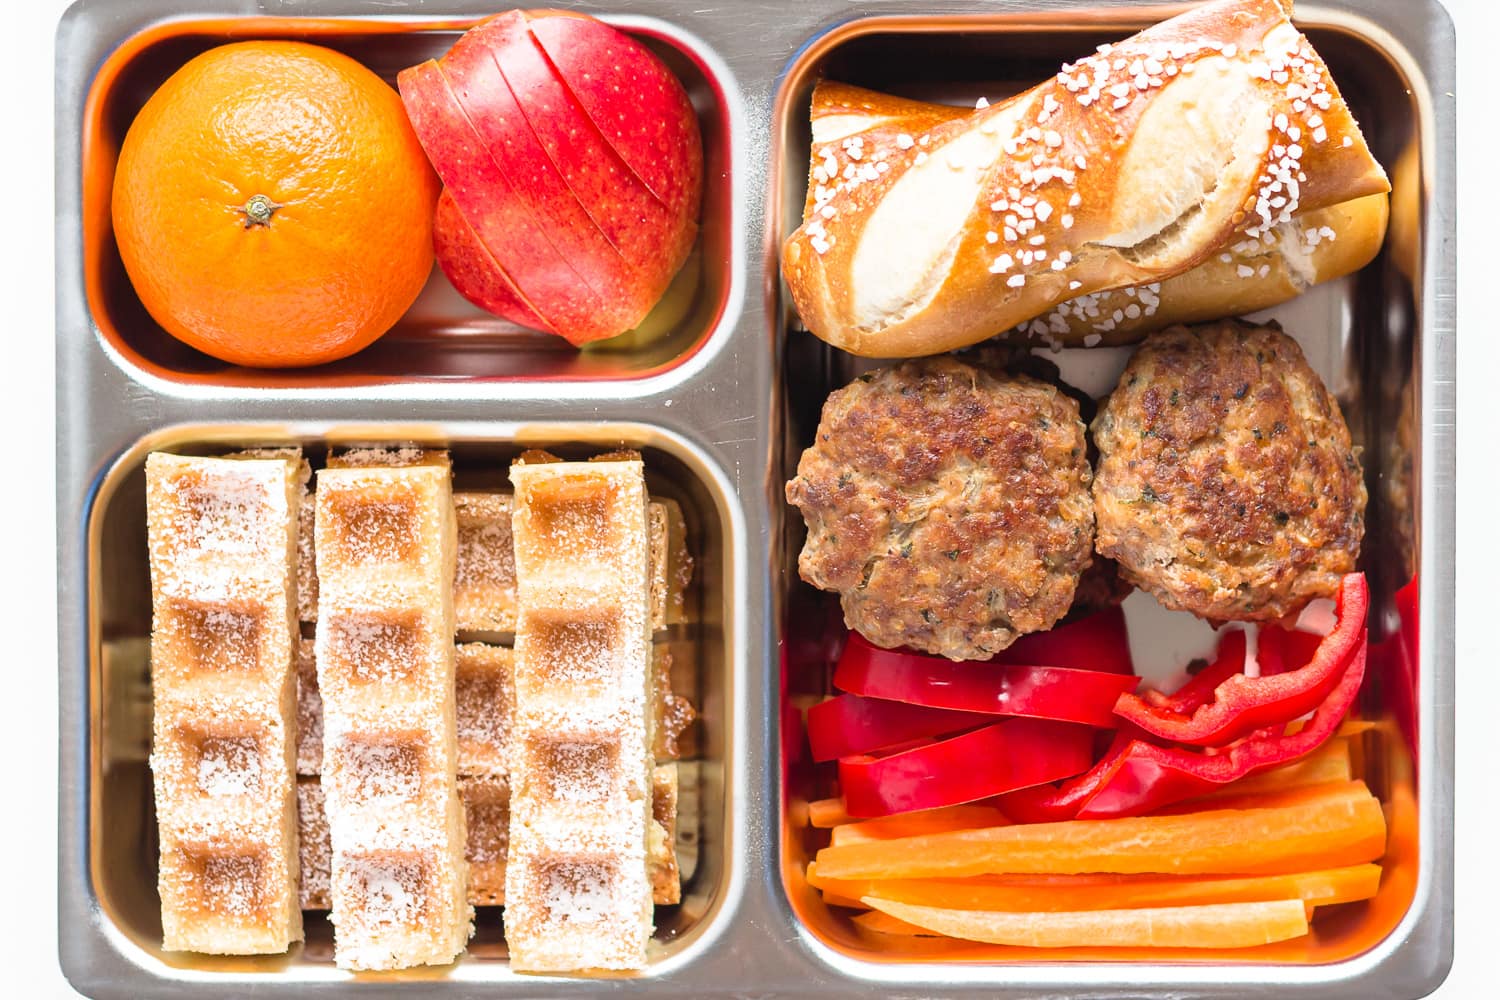 Lunch box filled with cold frikadellen, pretzel stick, red bell pepper slices, carrot sticks, sliced german waffles, apple and mandarin.